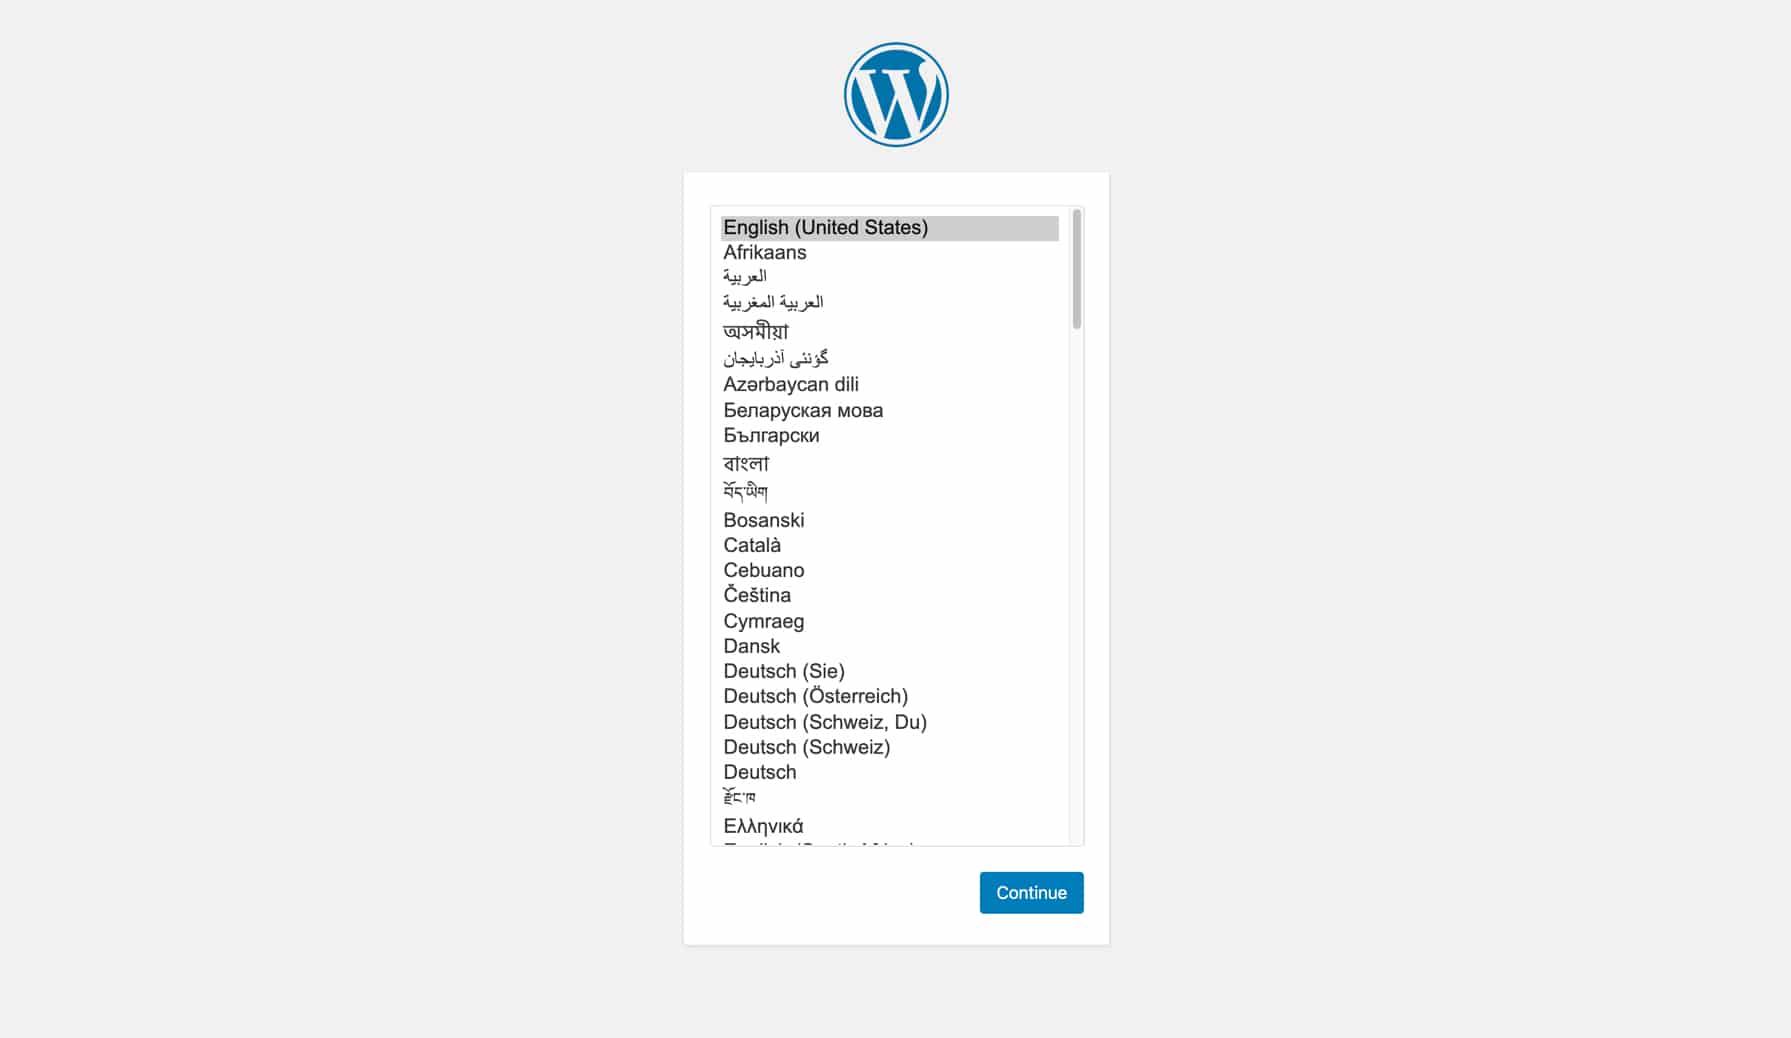 Configure the new installation of WordPress.